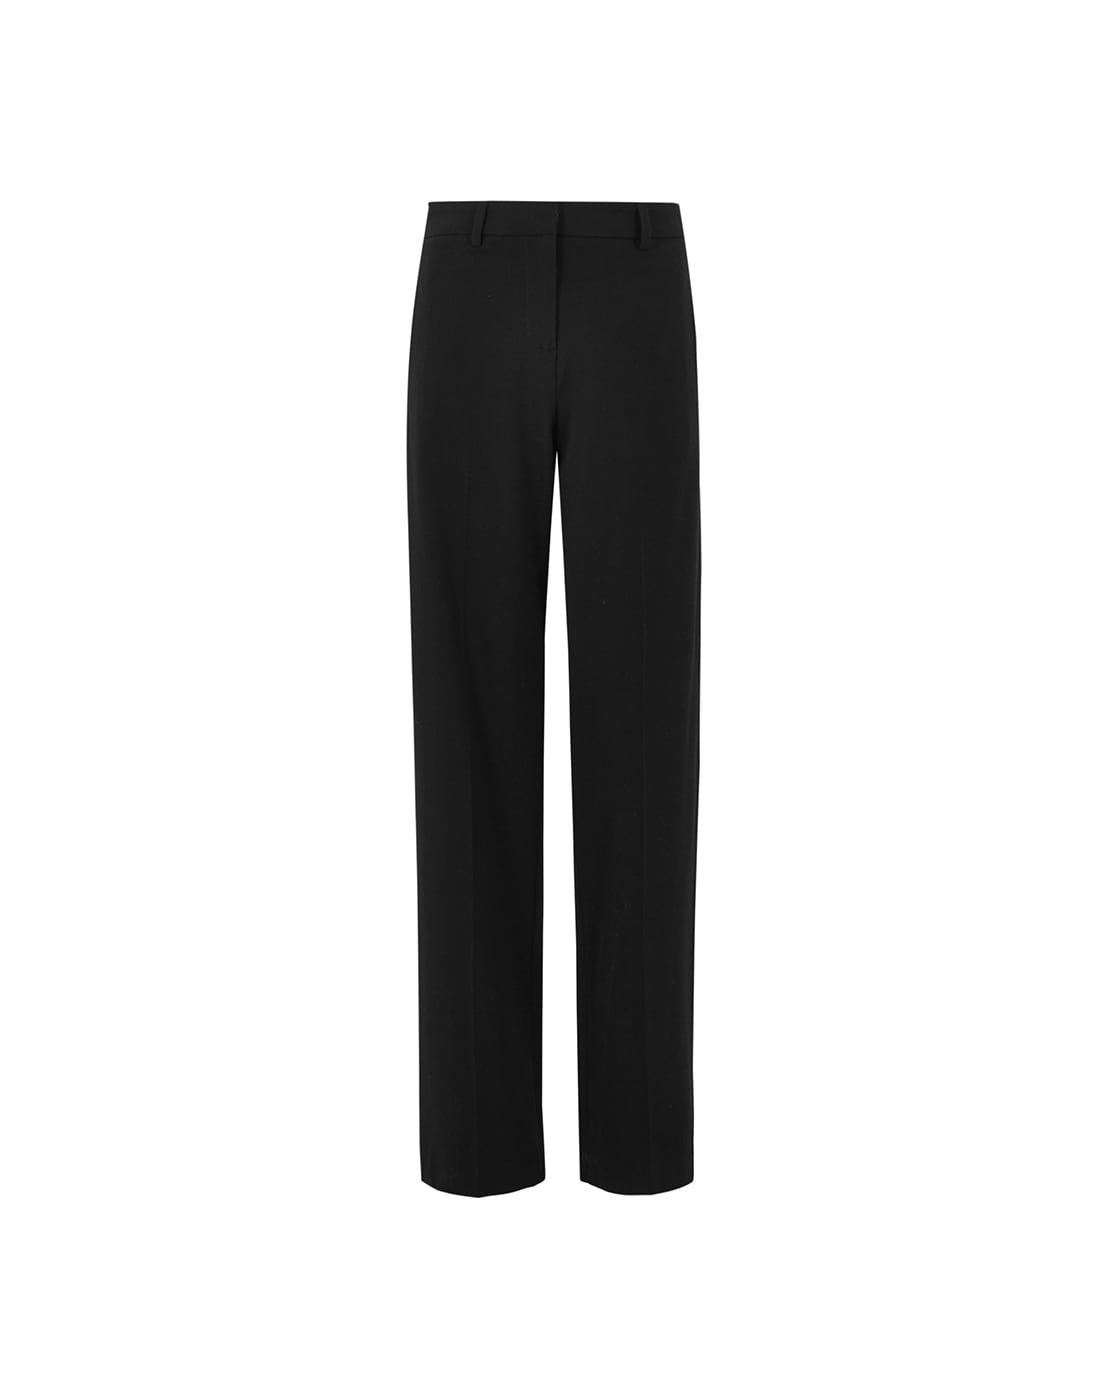 Womens Marks & Spencer Black Linen Trousers Size 16/L29 – Preworn Ltd